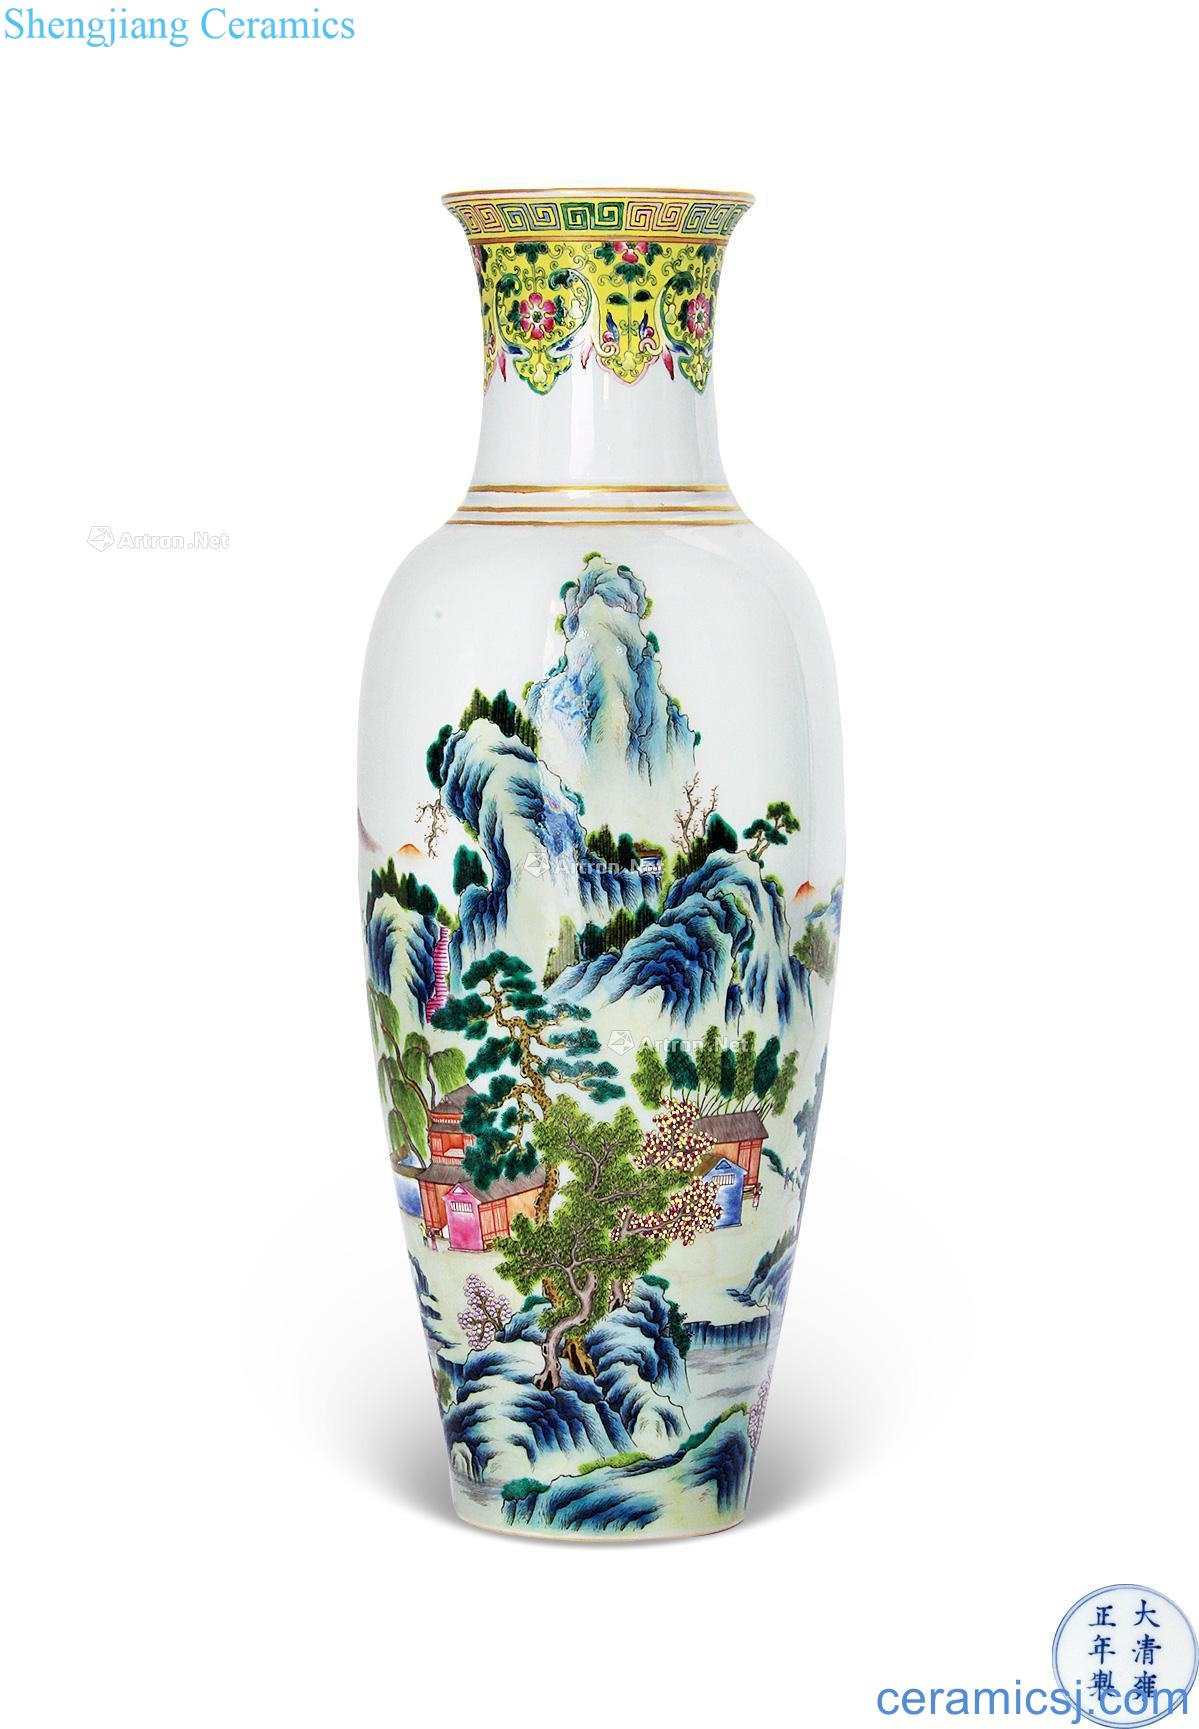 Goddess of mercy bottle yongzheng colorful landscape characters